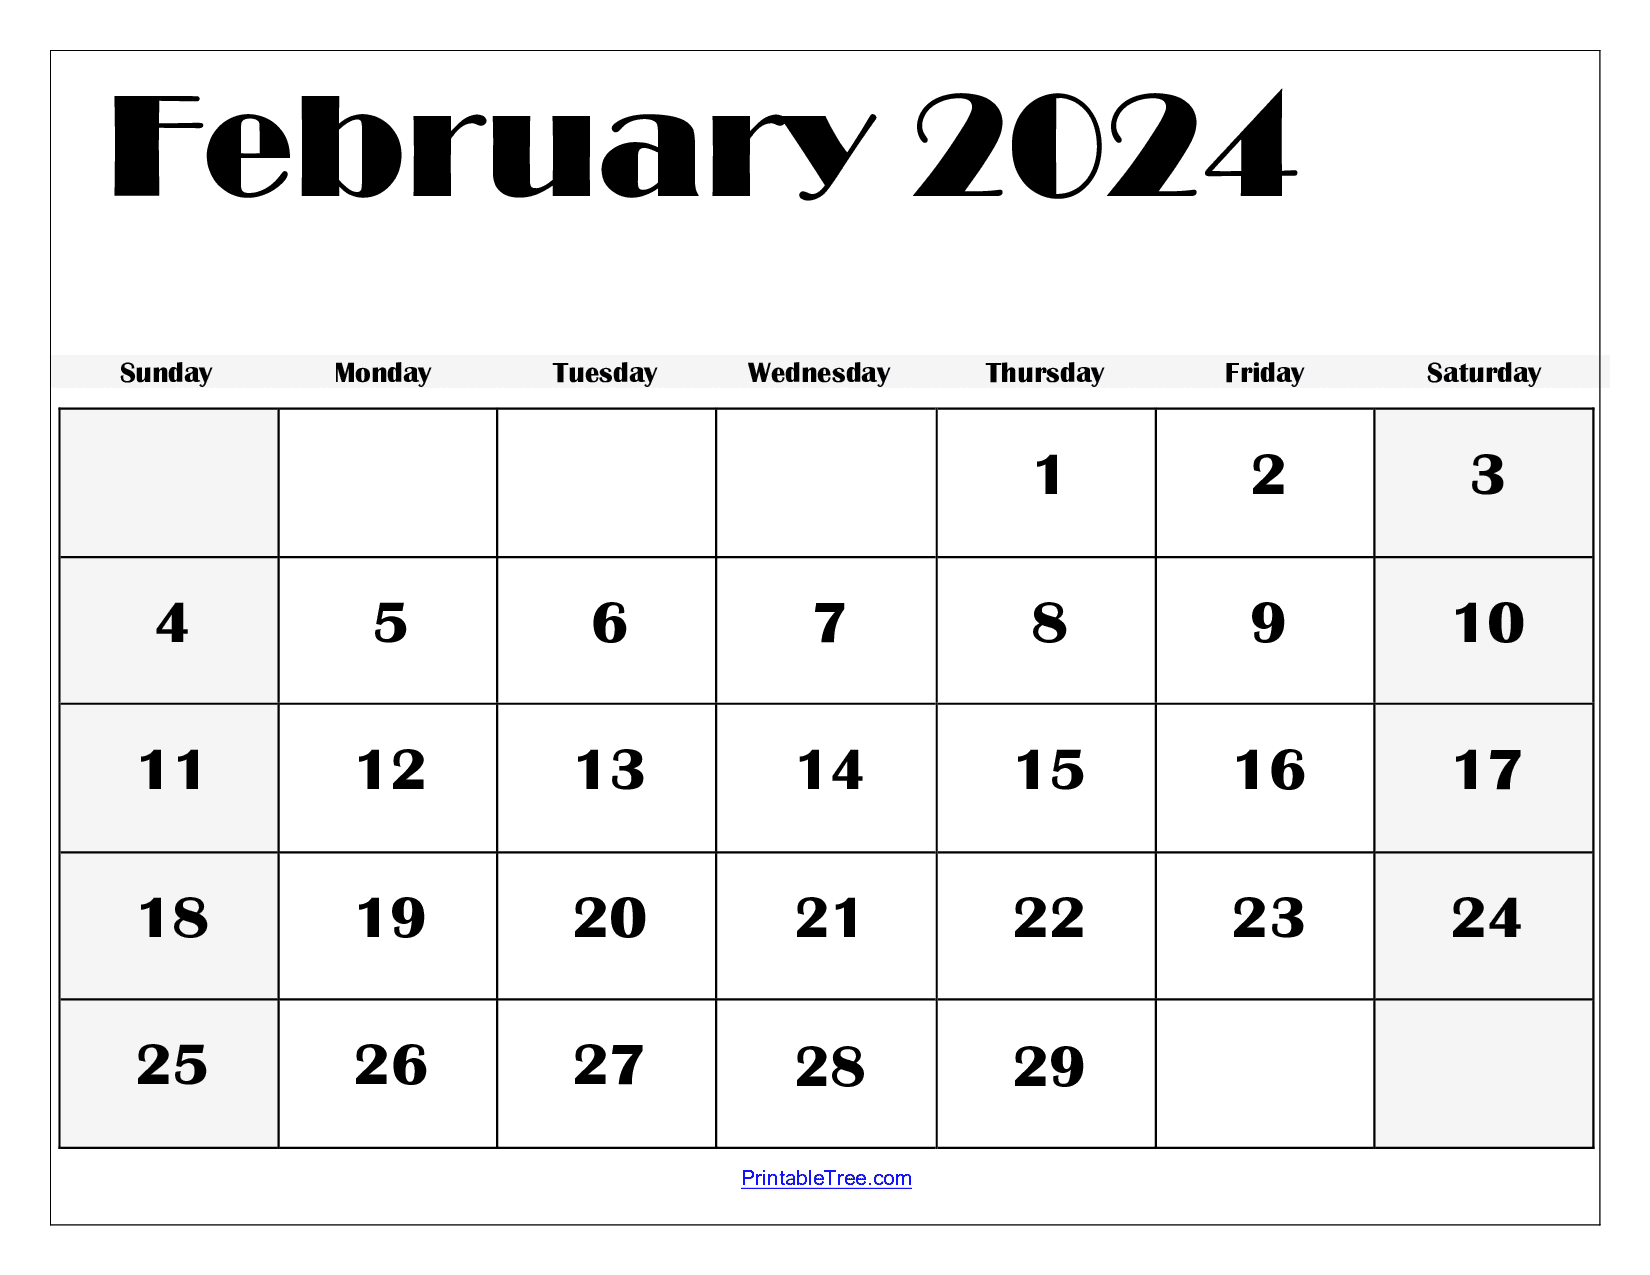 February 2024 Calendar Printable Pdf Template With Holidays for Printable February 2024 Calendar Page